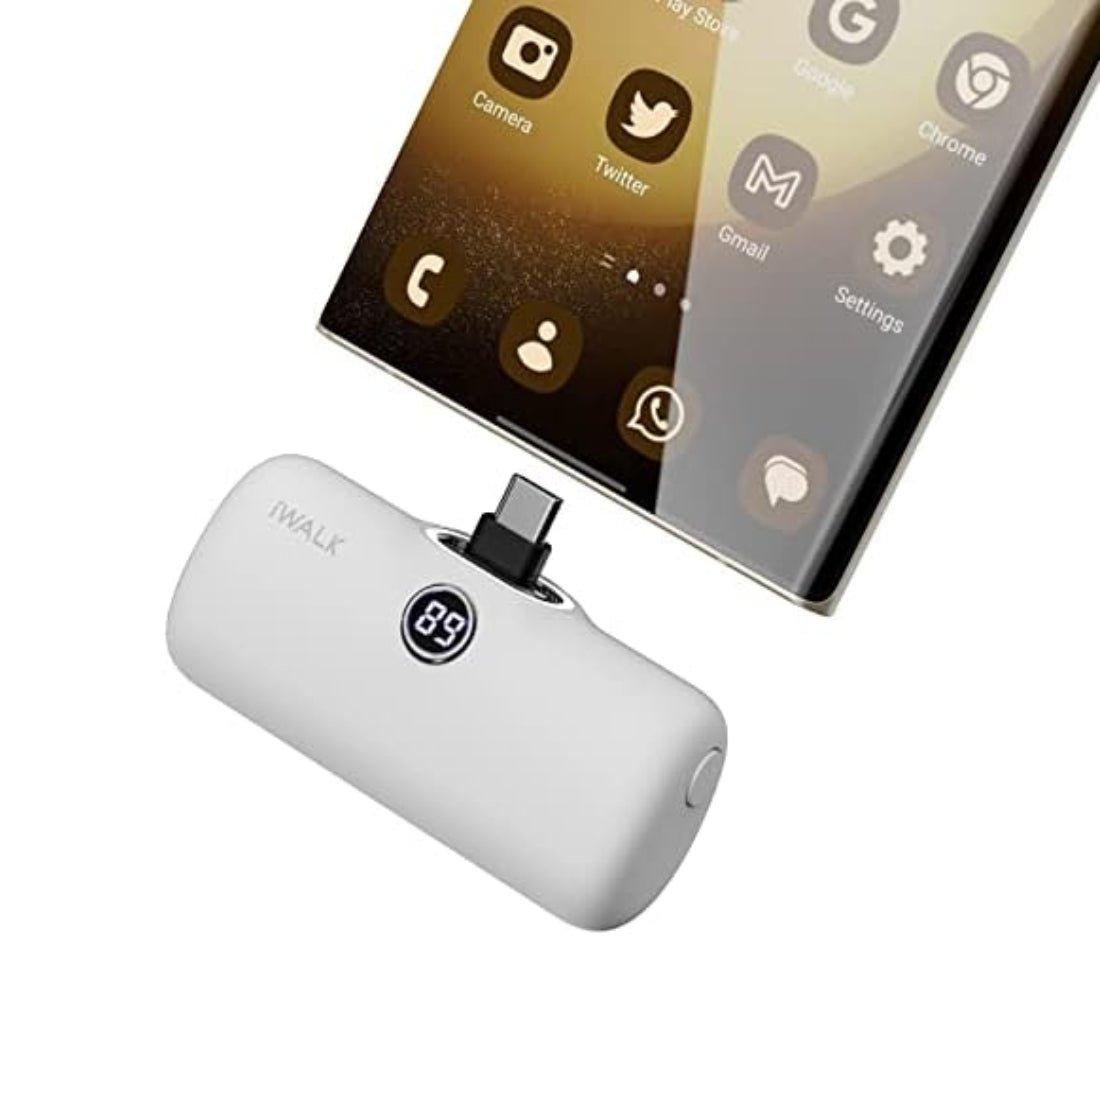 iWALK LinkPod Portable Charger 4800mAh Power Bank - White - مزود طاقة - Store 974 | ستور ٩٧٤